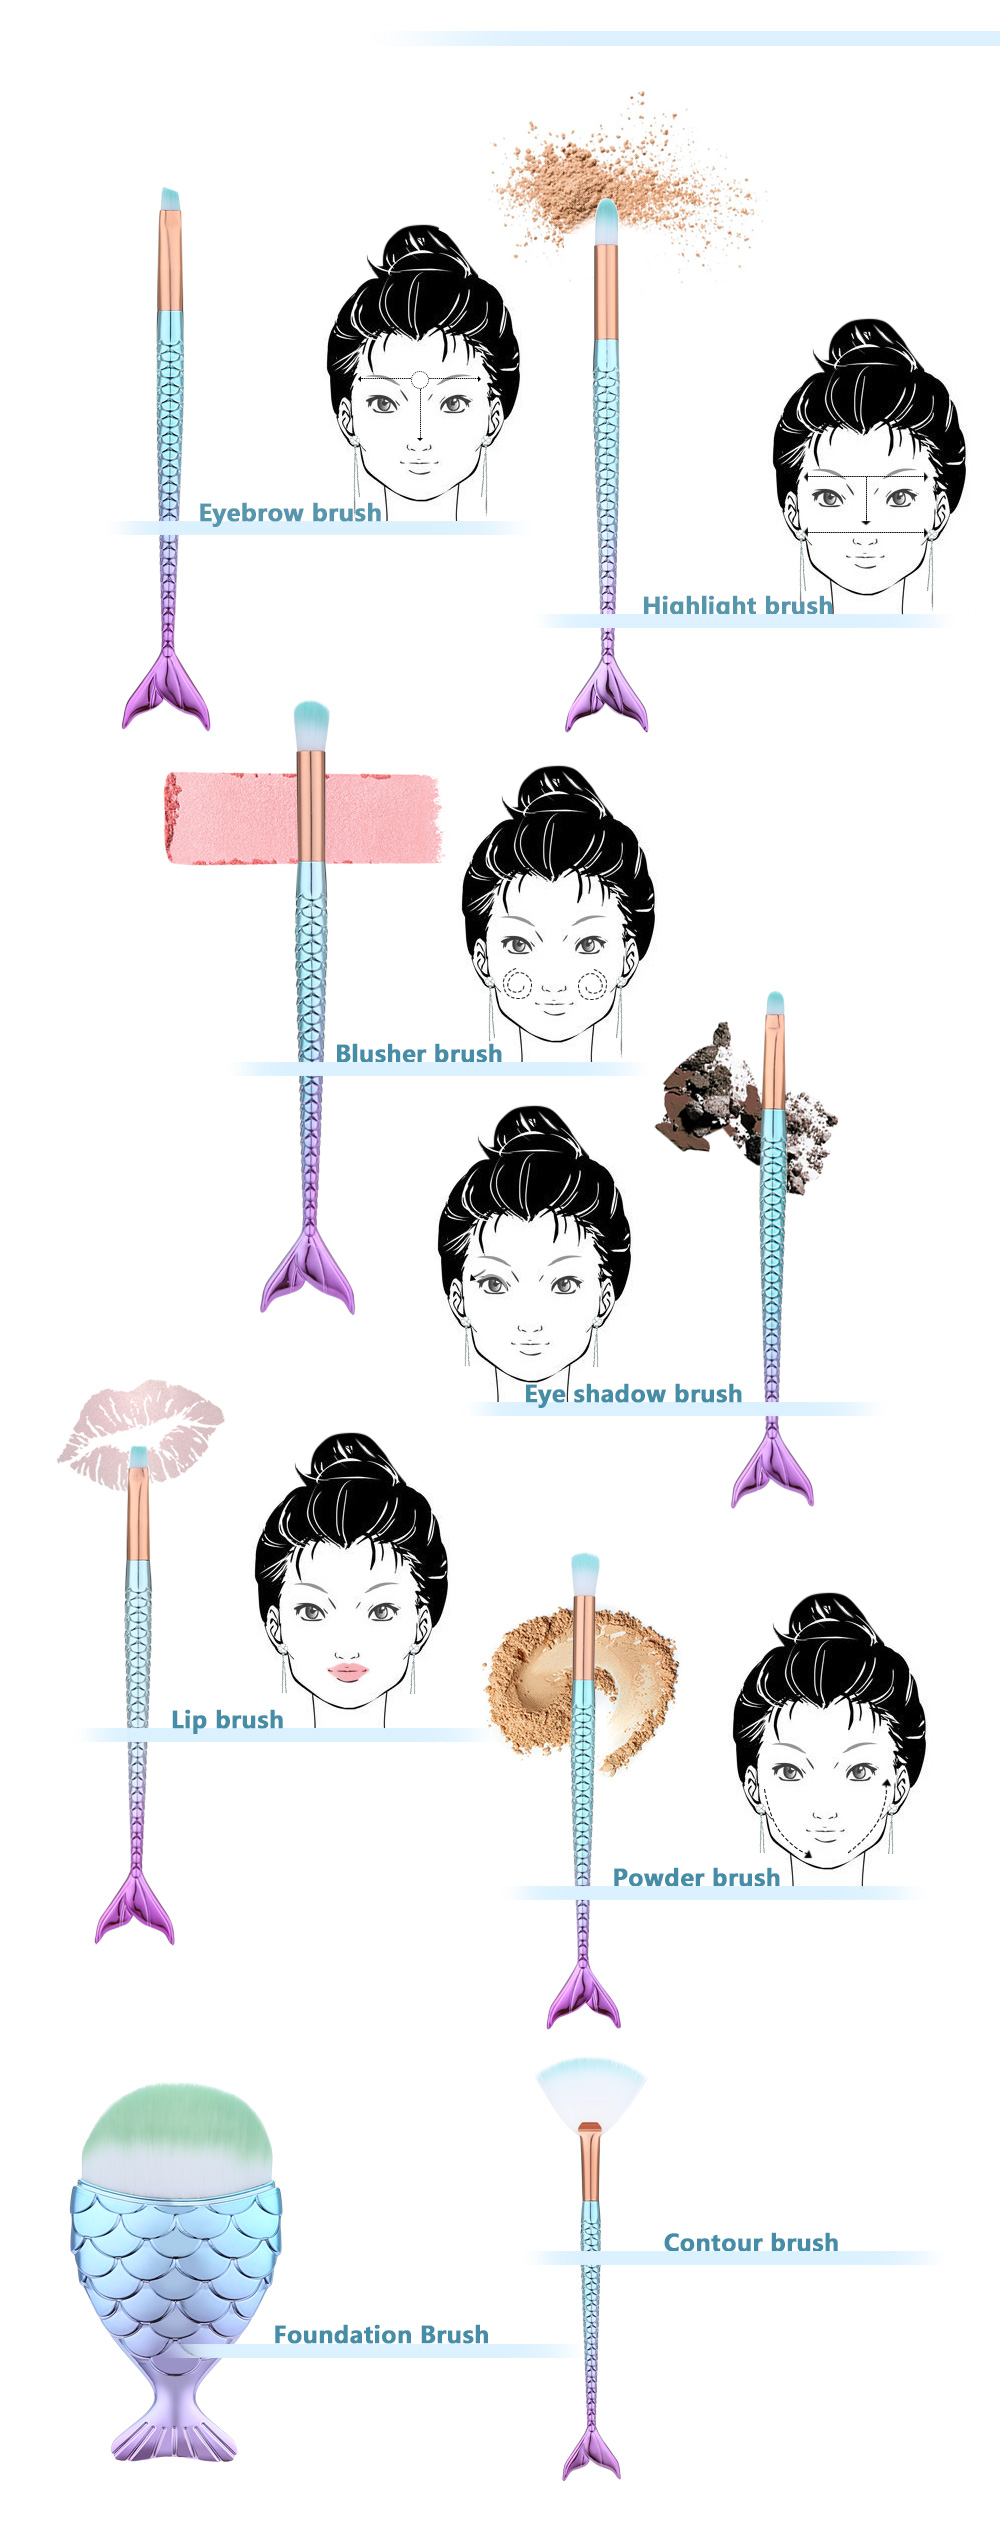 Fish Tail Makeup Brush Foundation Blending Powder Eye Shadow Contour Concealer Blush Cosmetic Beauty Tool